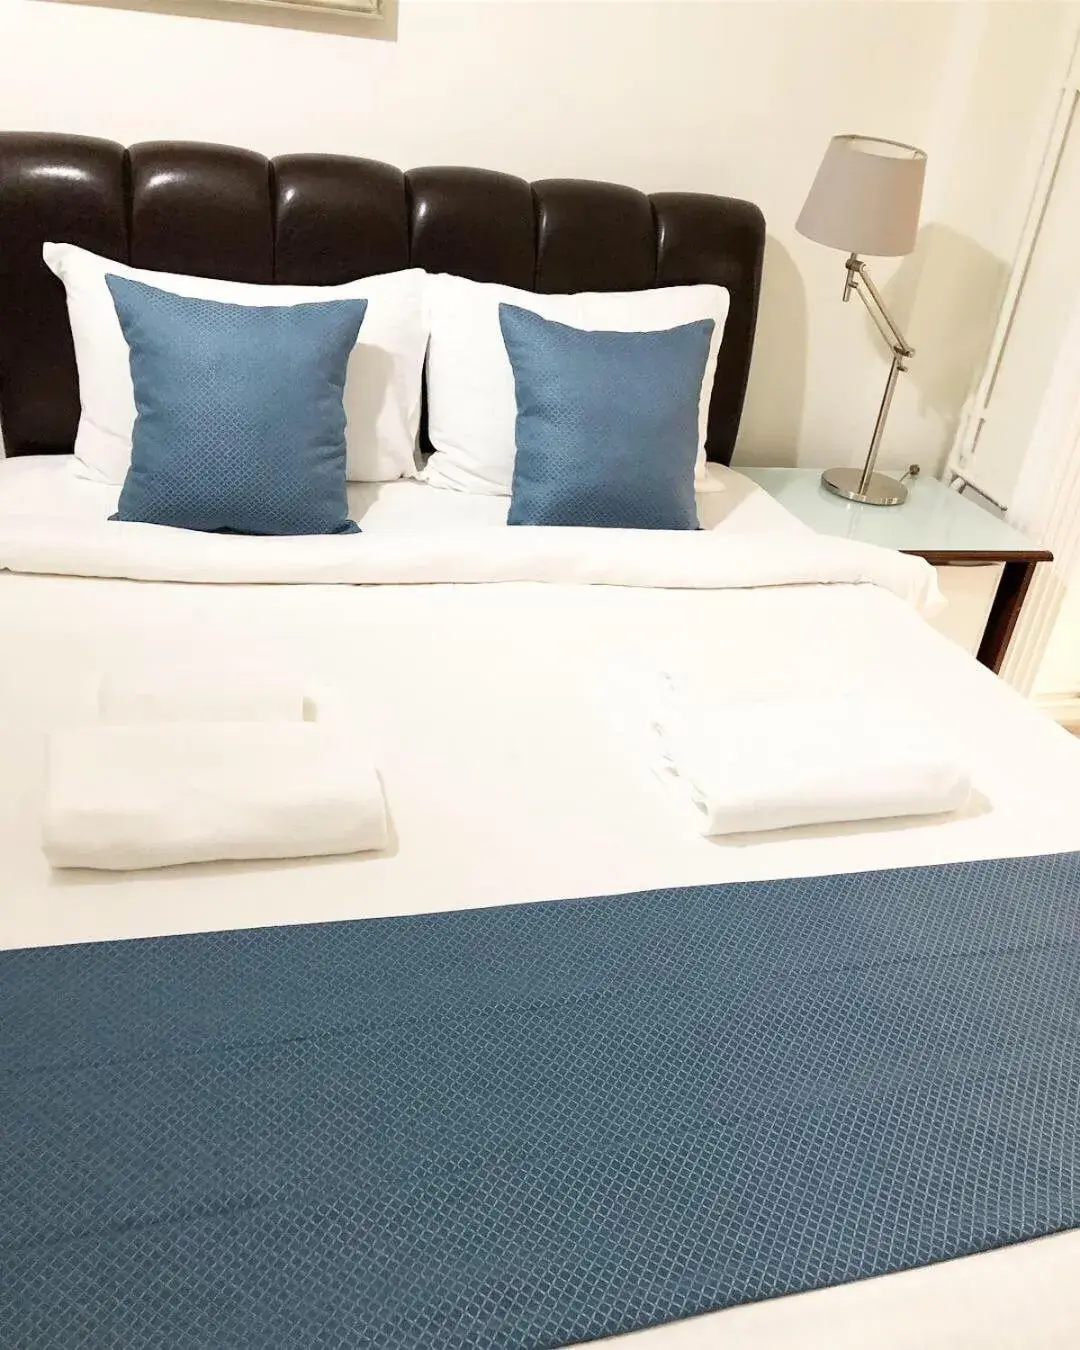 Bed in MyKent Hotel